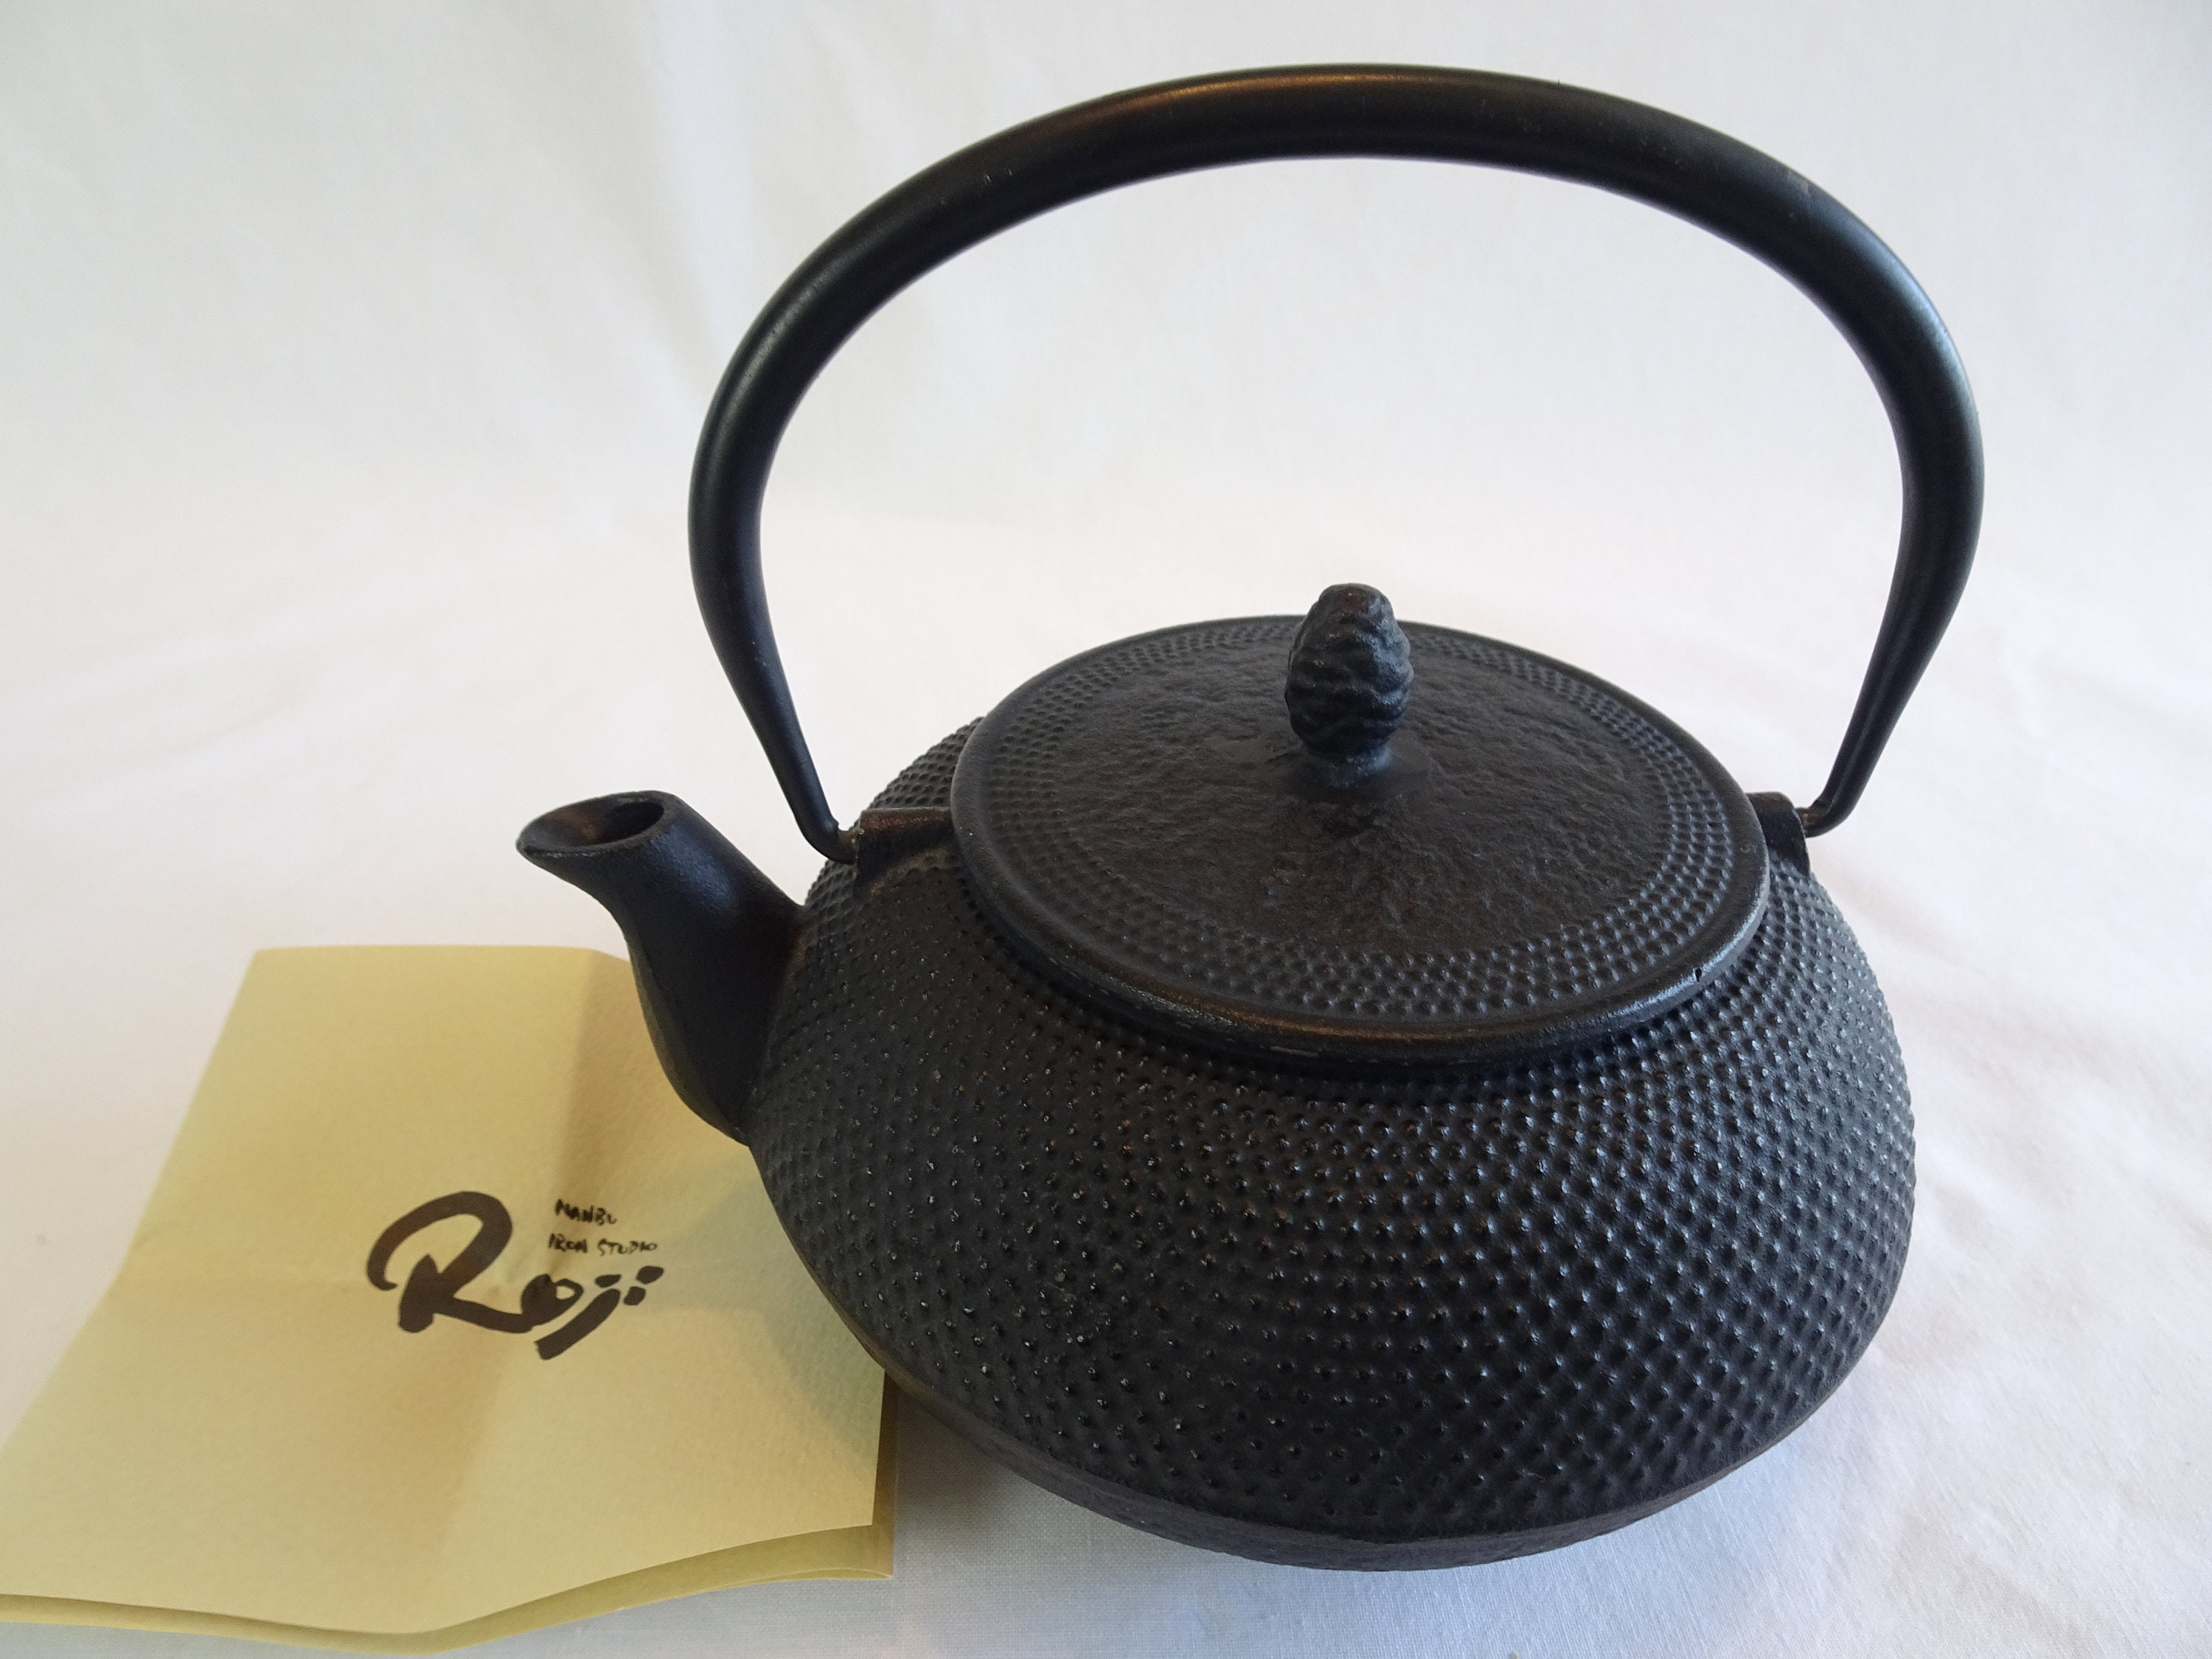 Cast Iron Japanese Tea Pot Teapot / Kettle Large 1.5L Solid Made